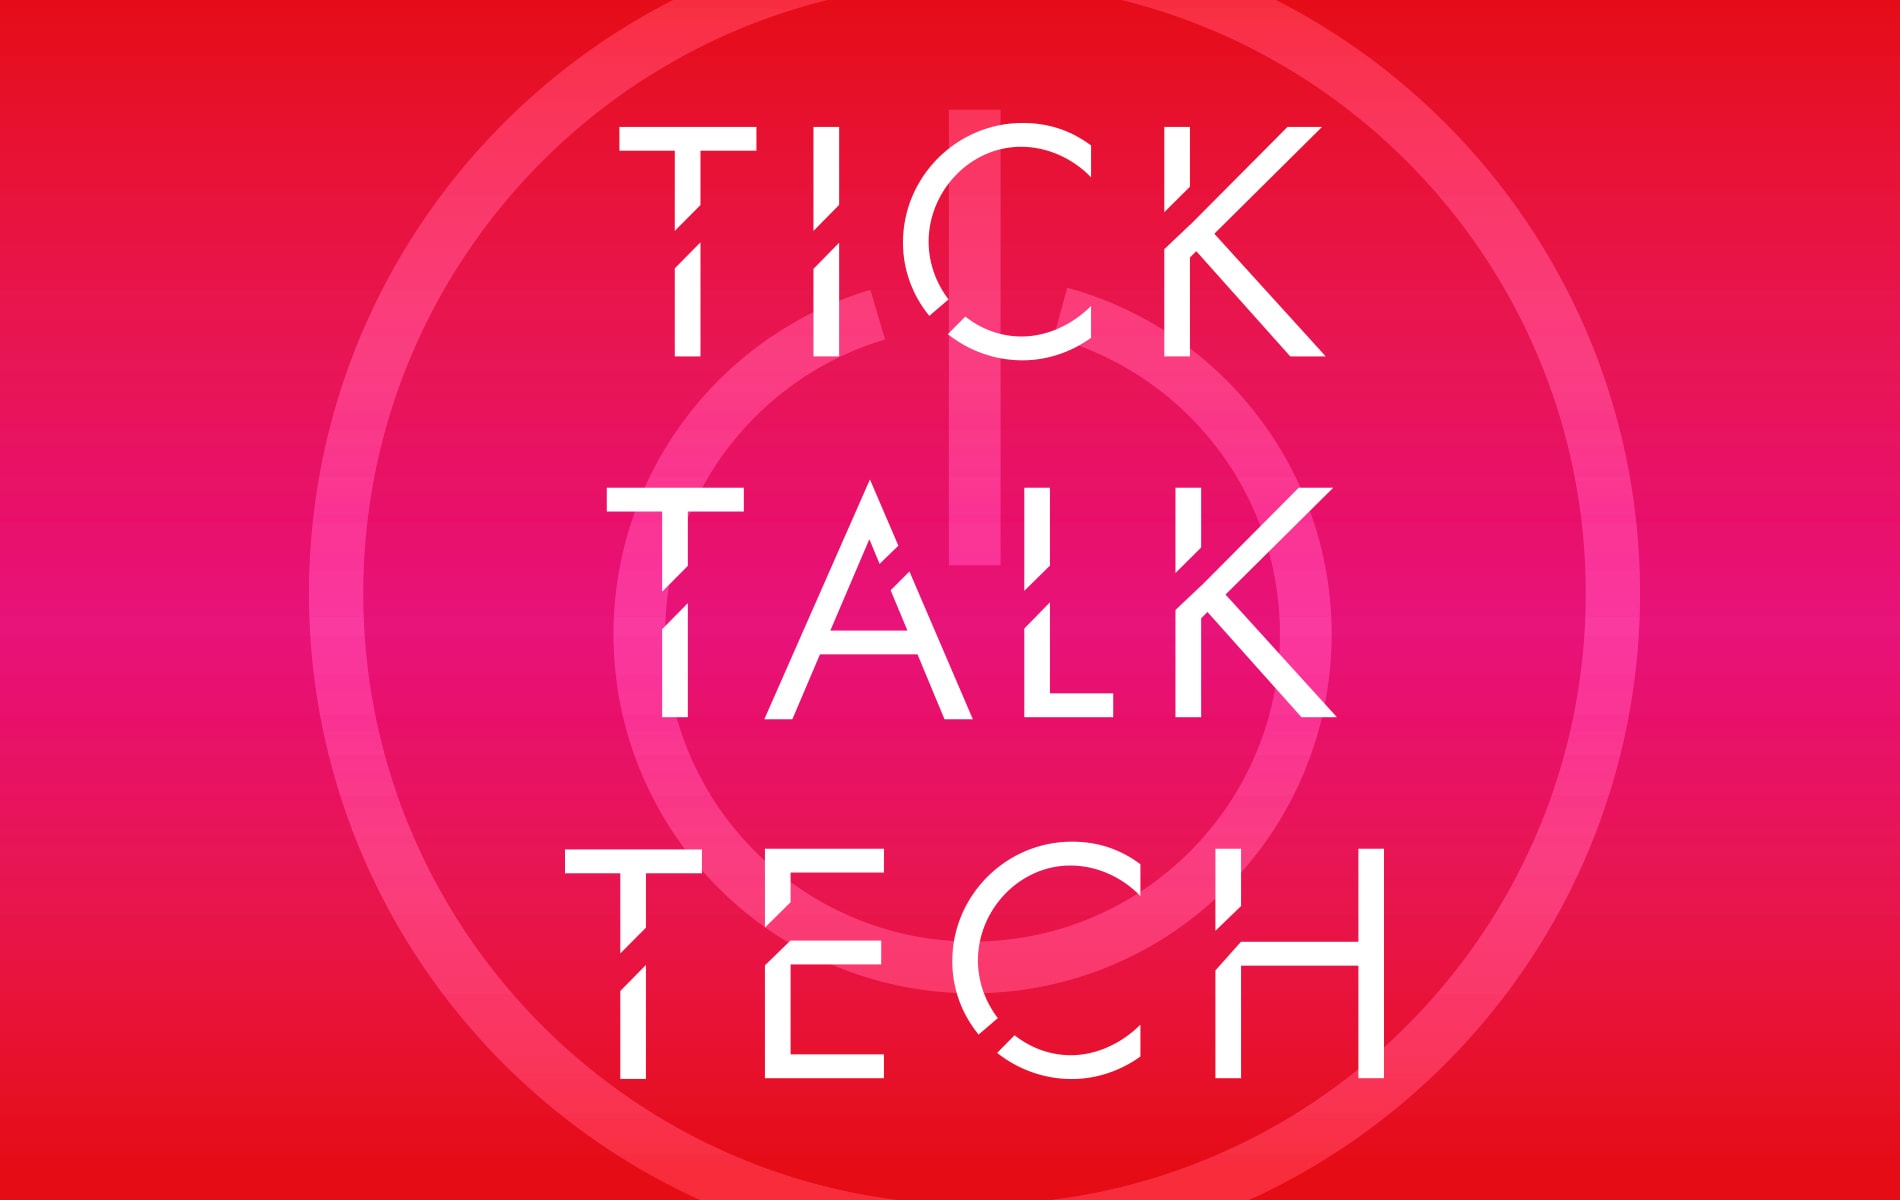 Tick, Talk, Tech